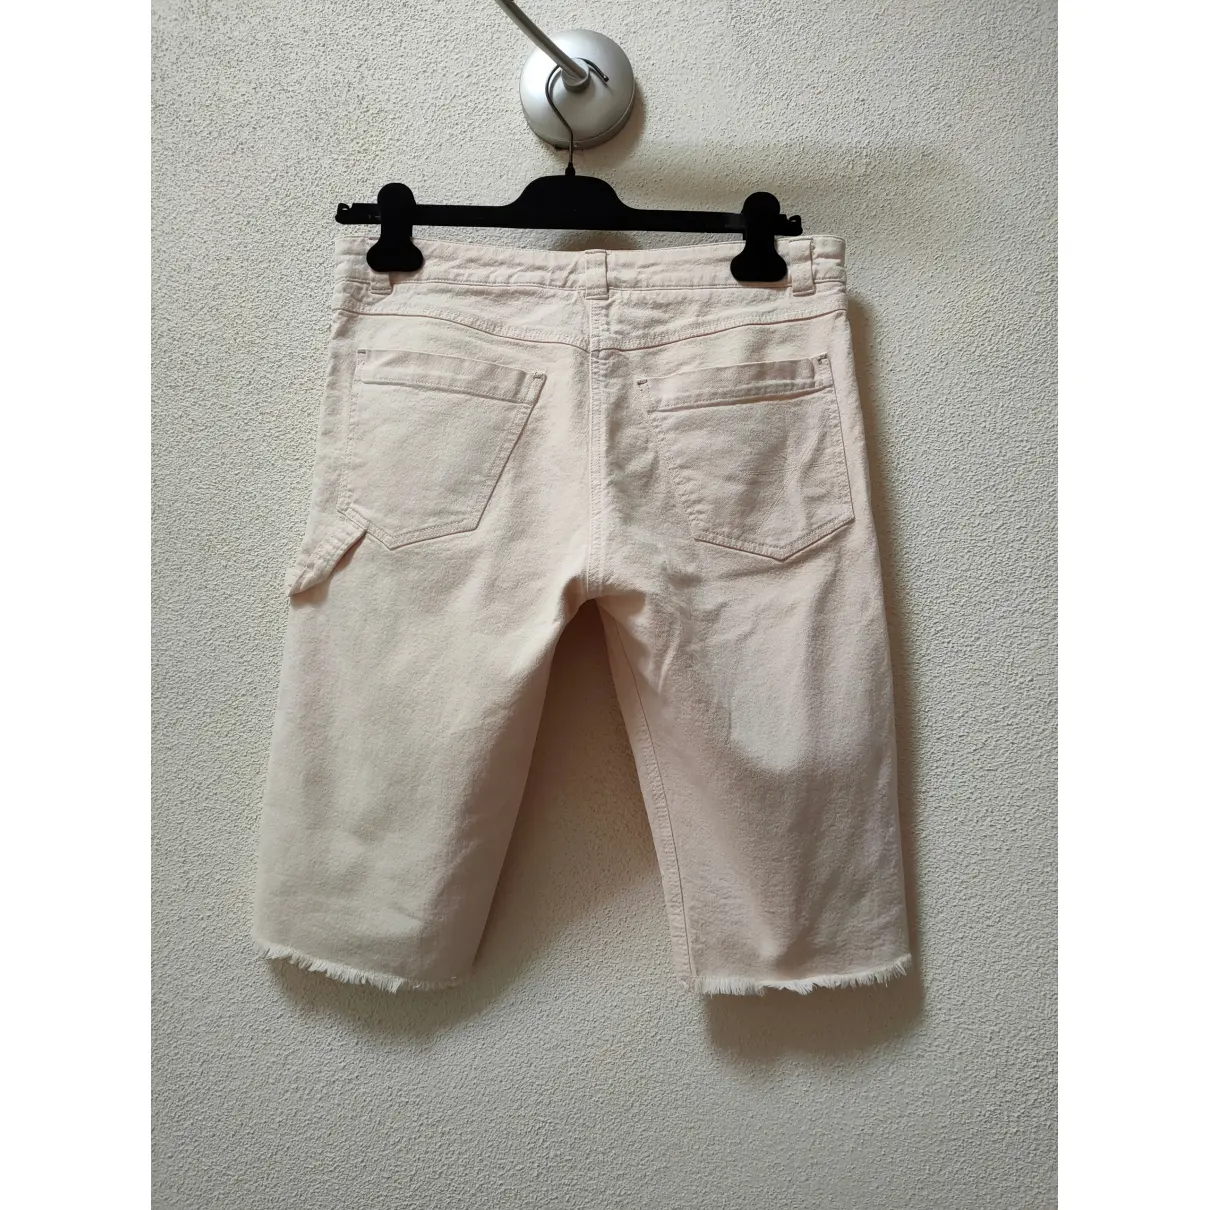 Buy Isabel Marant Etoile Short pants online